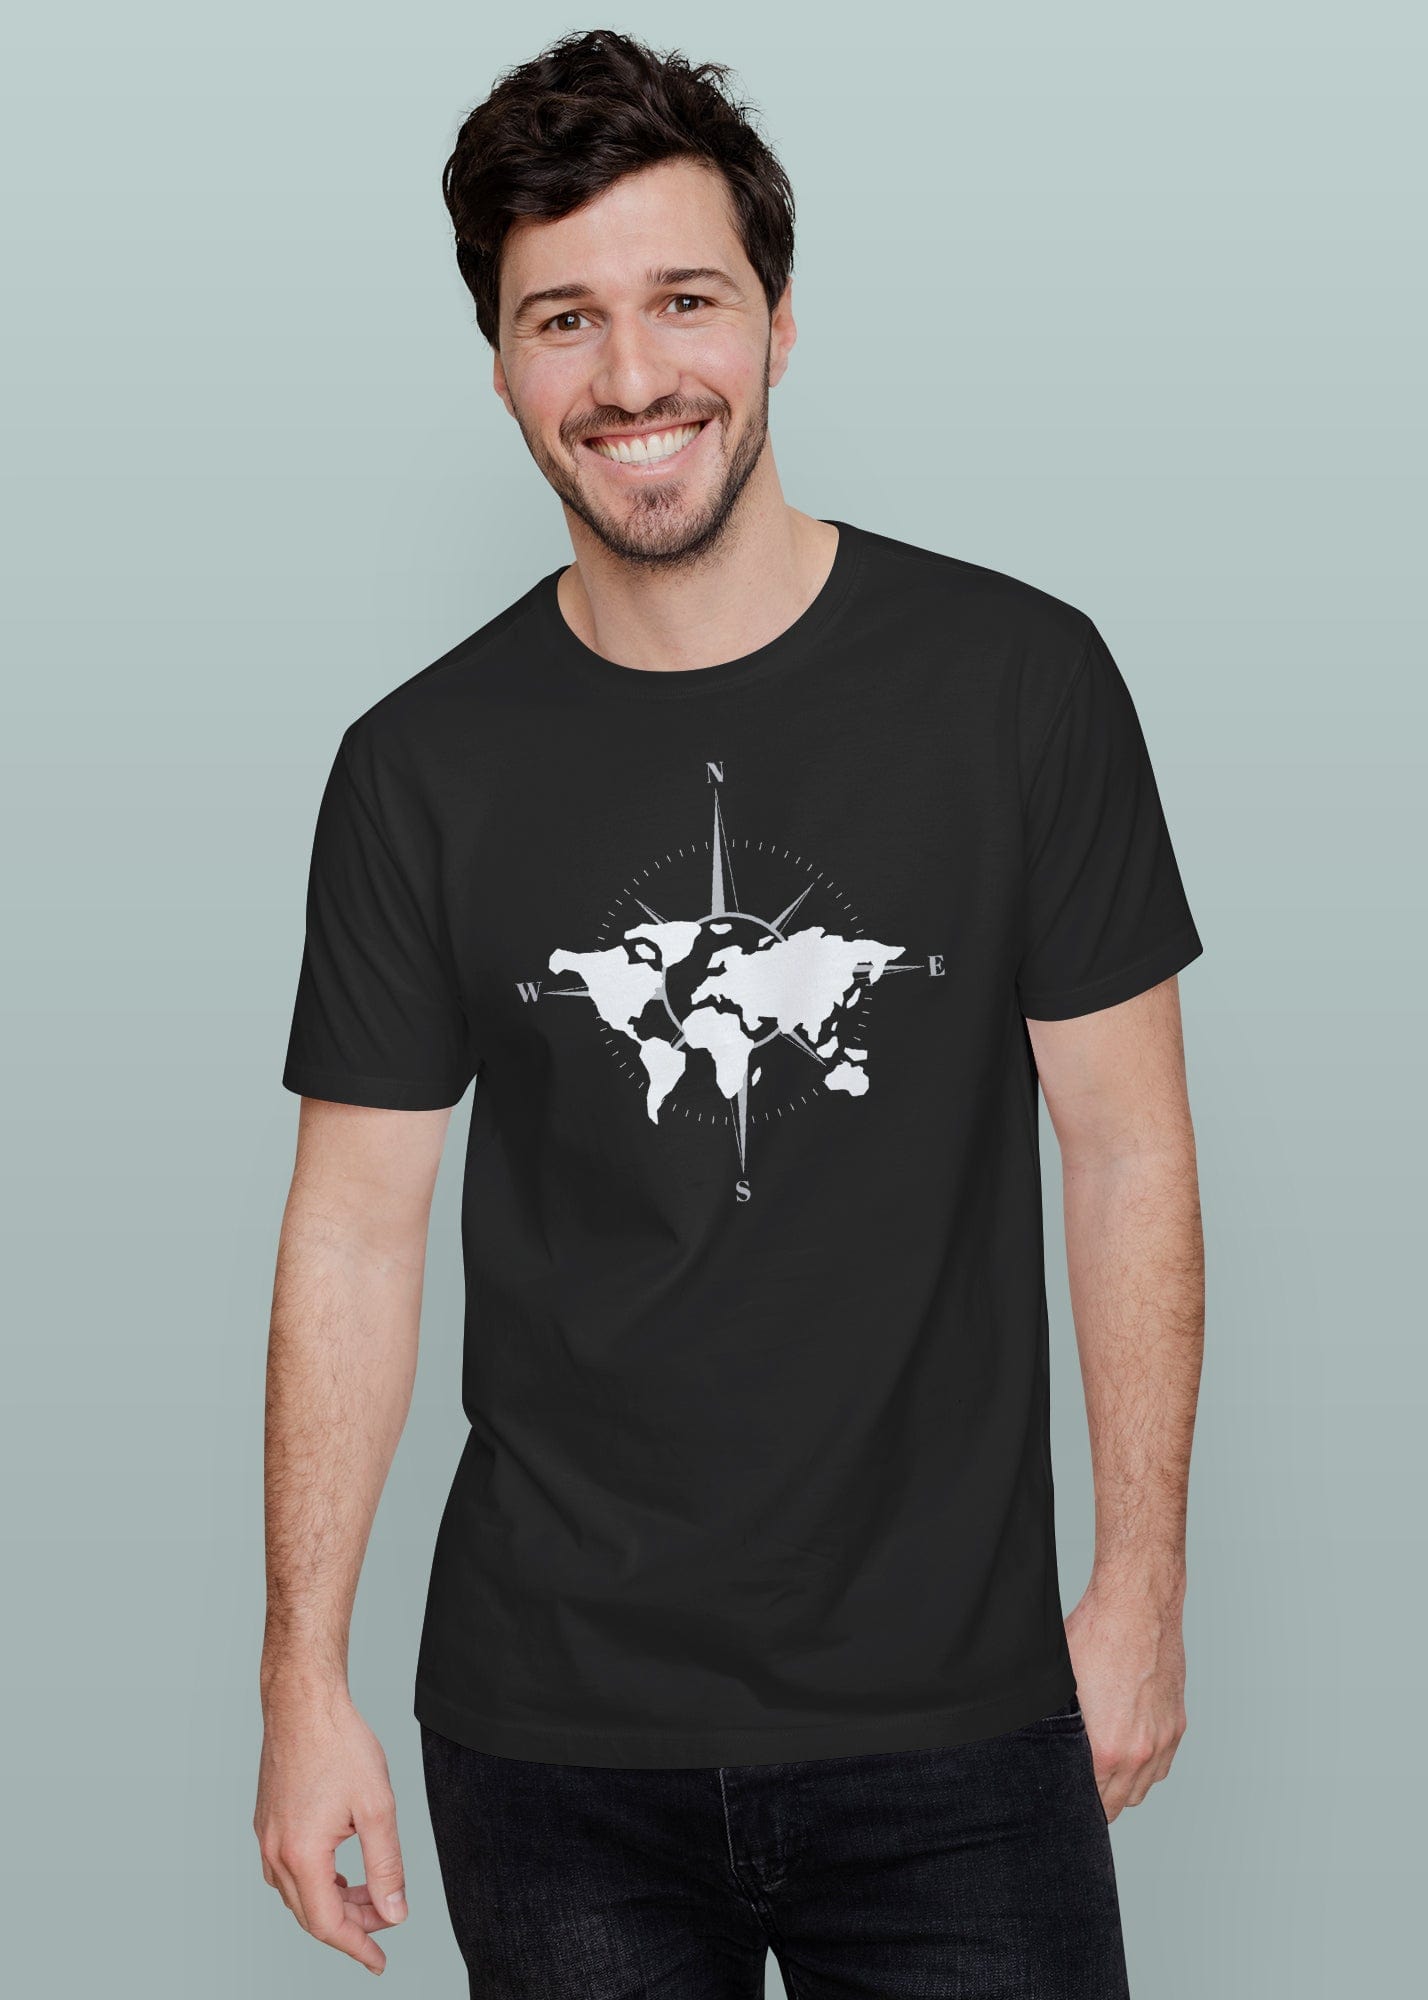 World Compass Printed Half Sleeve Premium Cotton T-shirt For Men